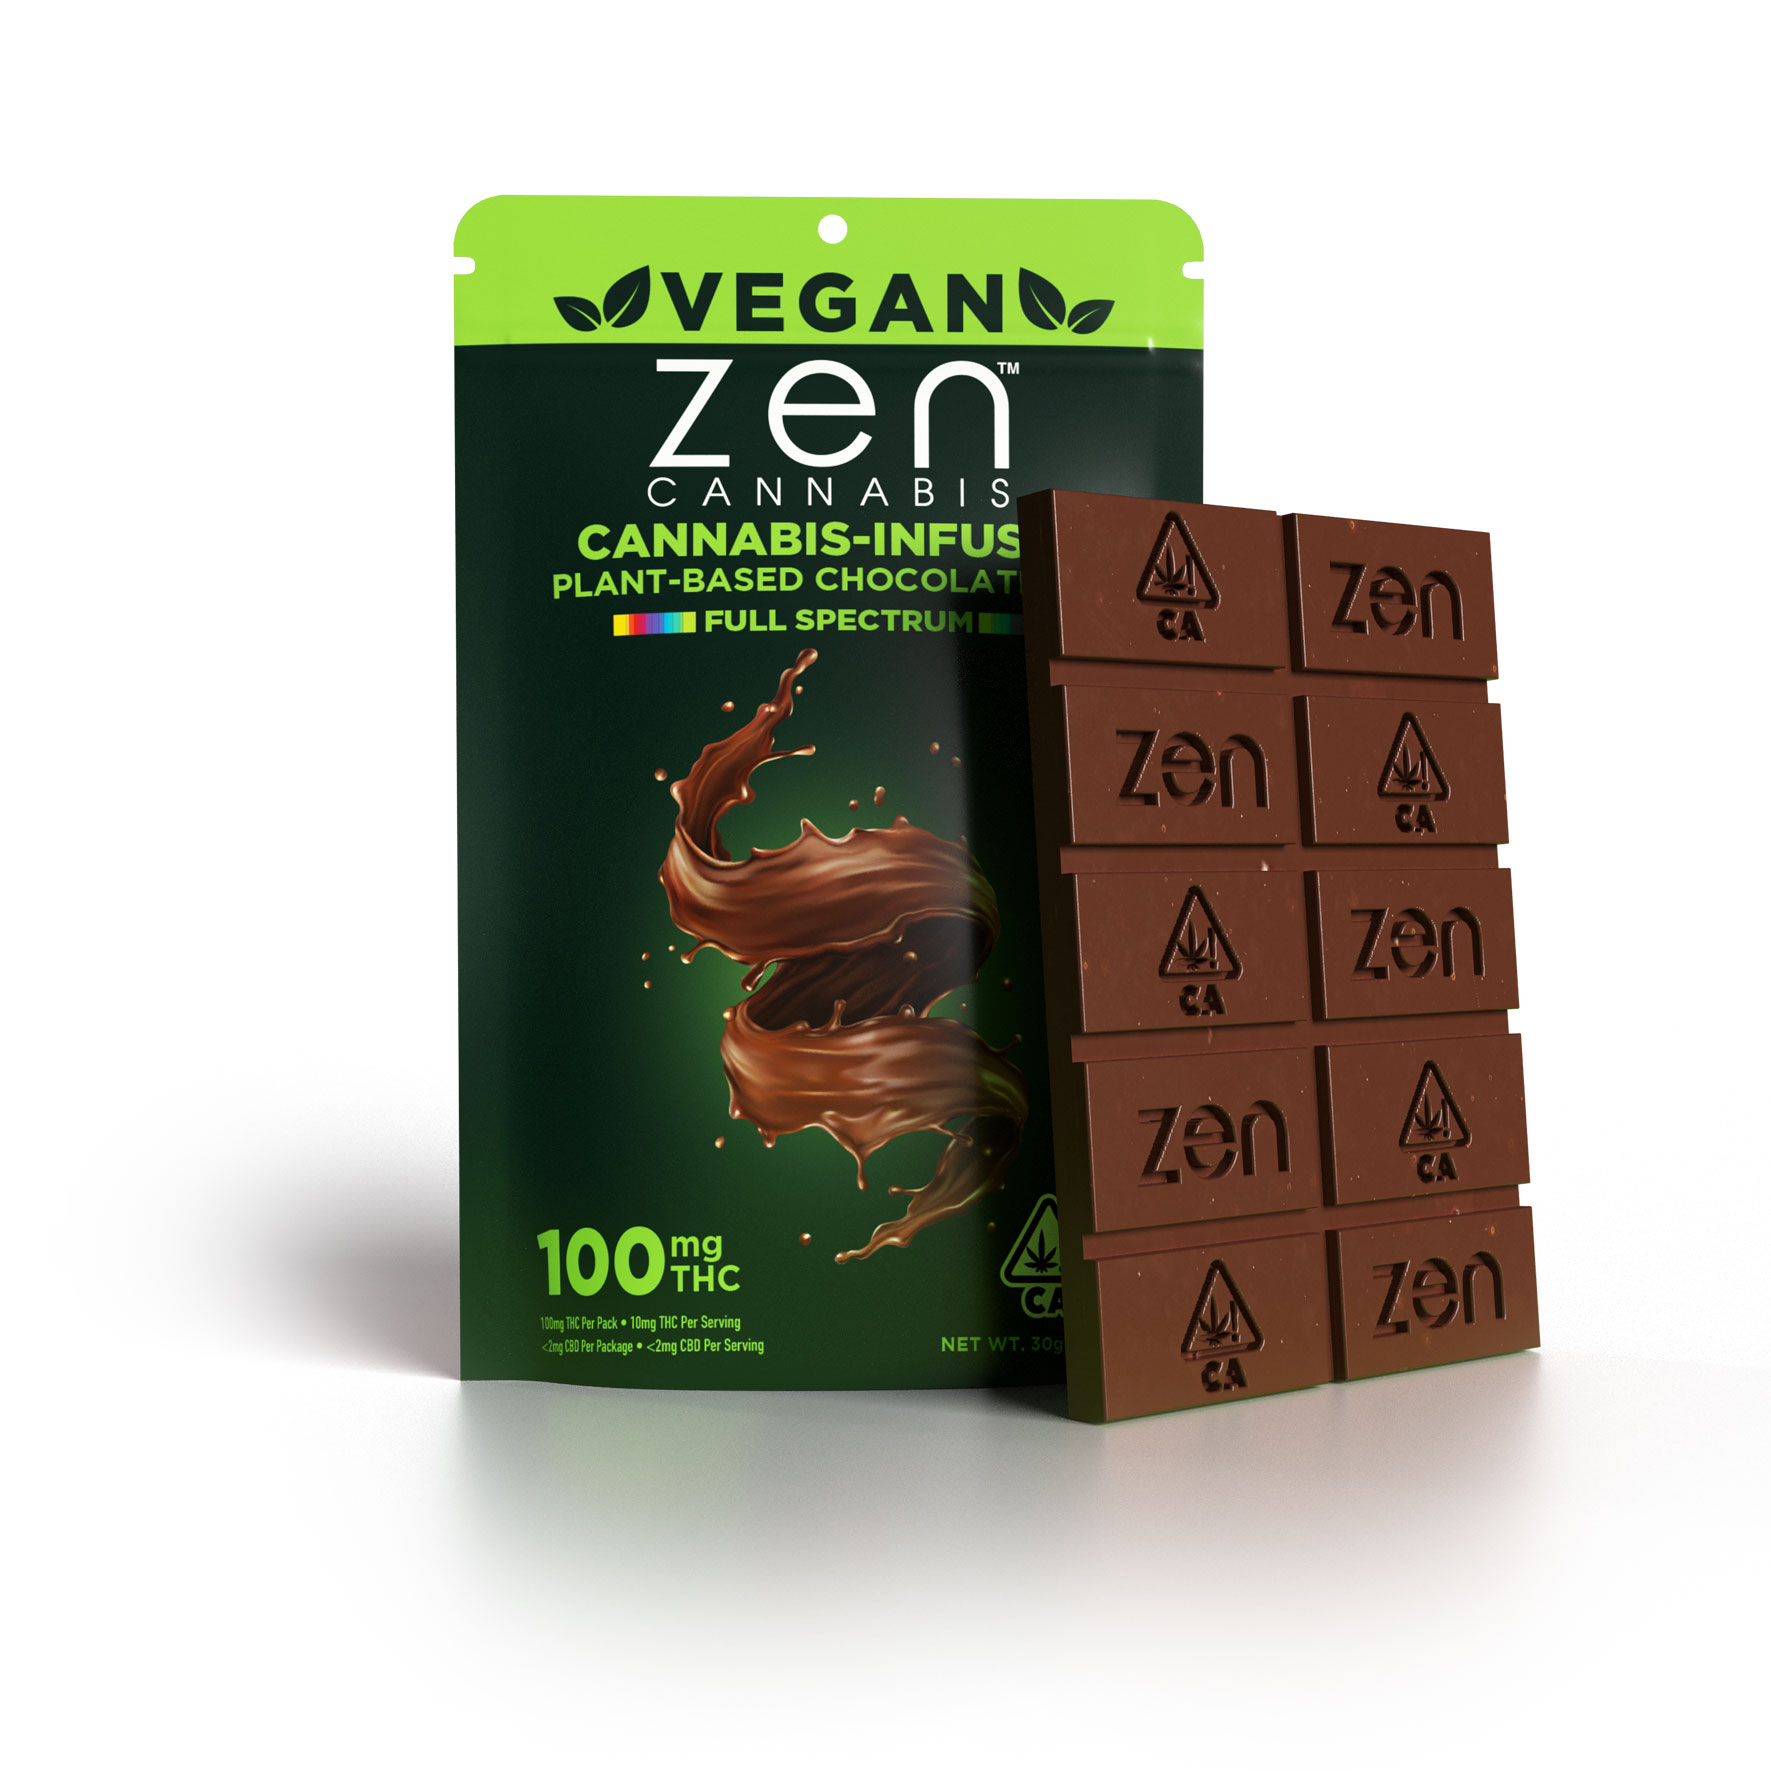 Plant-Based-Chocolate-Vegan-J-2